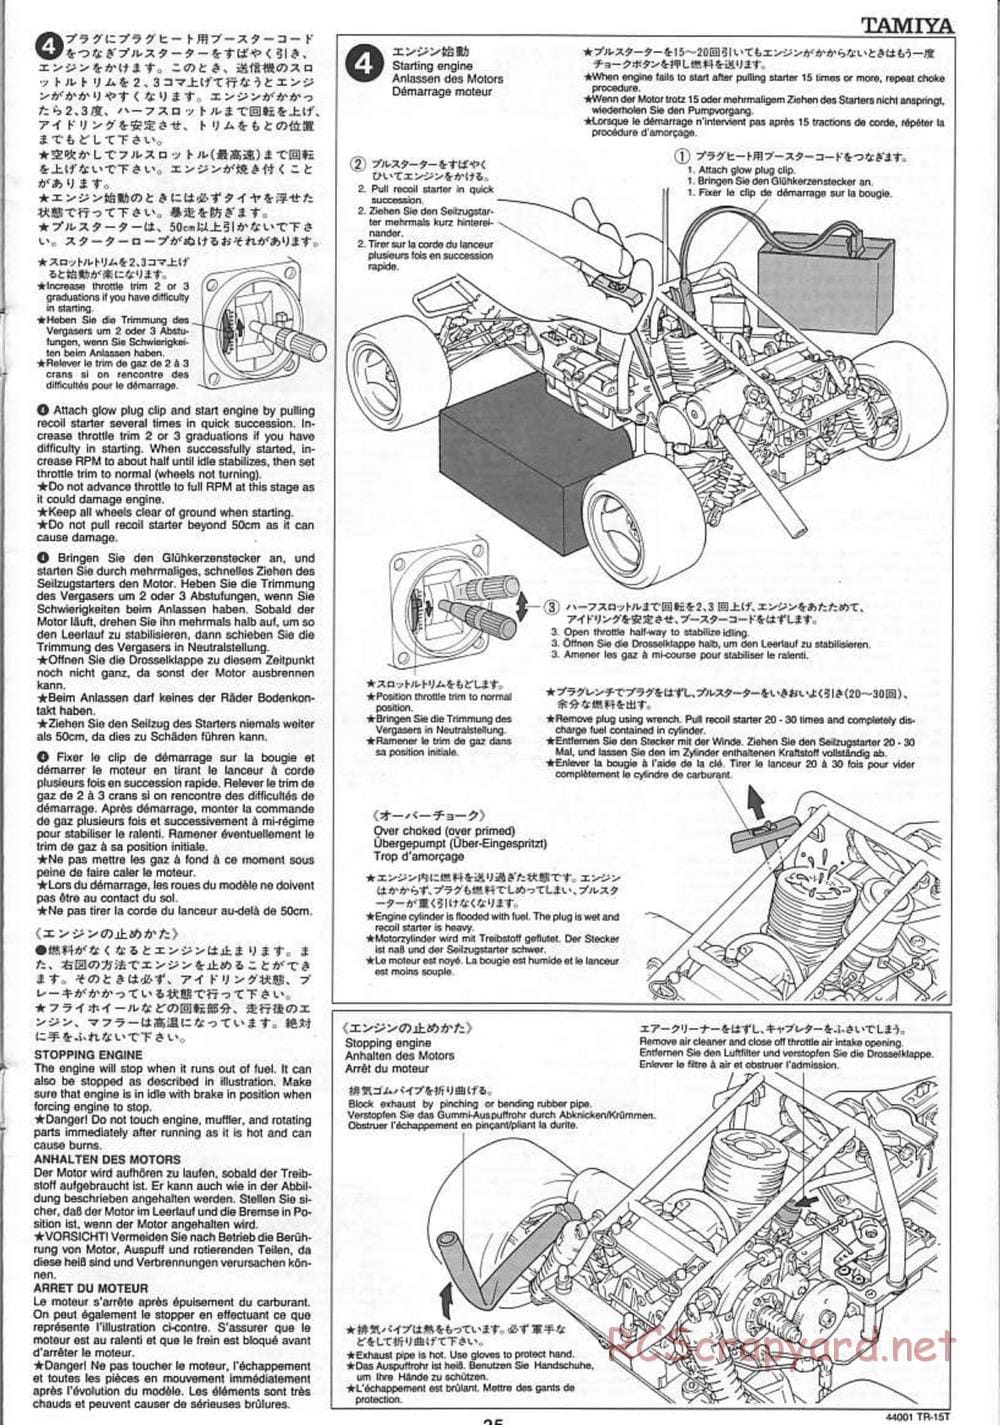 Tamiya - Stadium Racing Truck TR-15T Chassis - Manual - Page 25